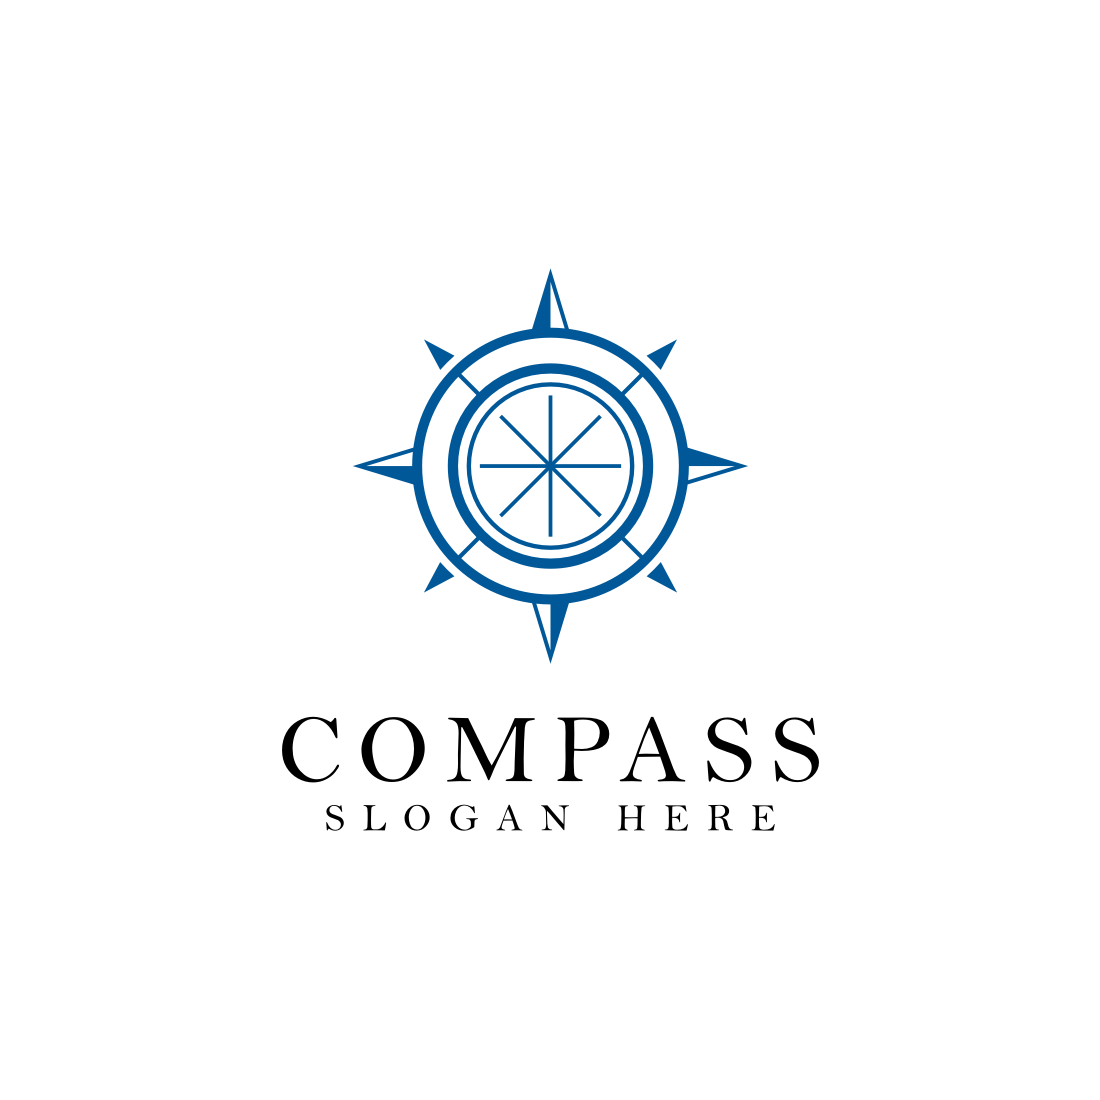 Premium Vintage Compass Logo | BrandCrowd Logo Maker